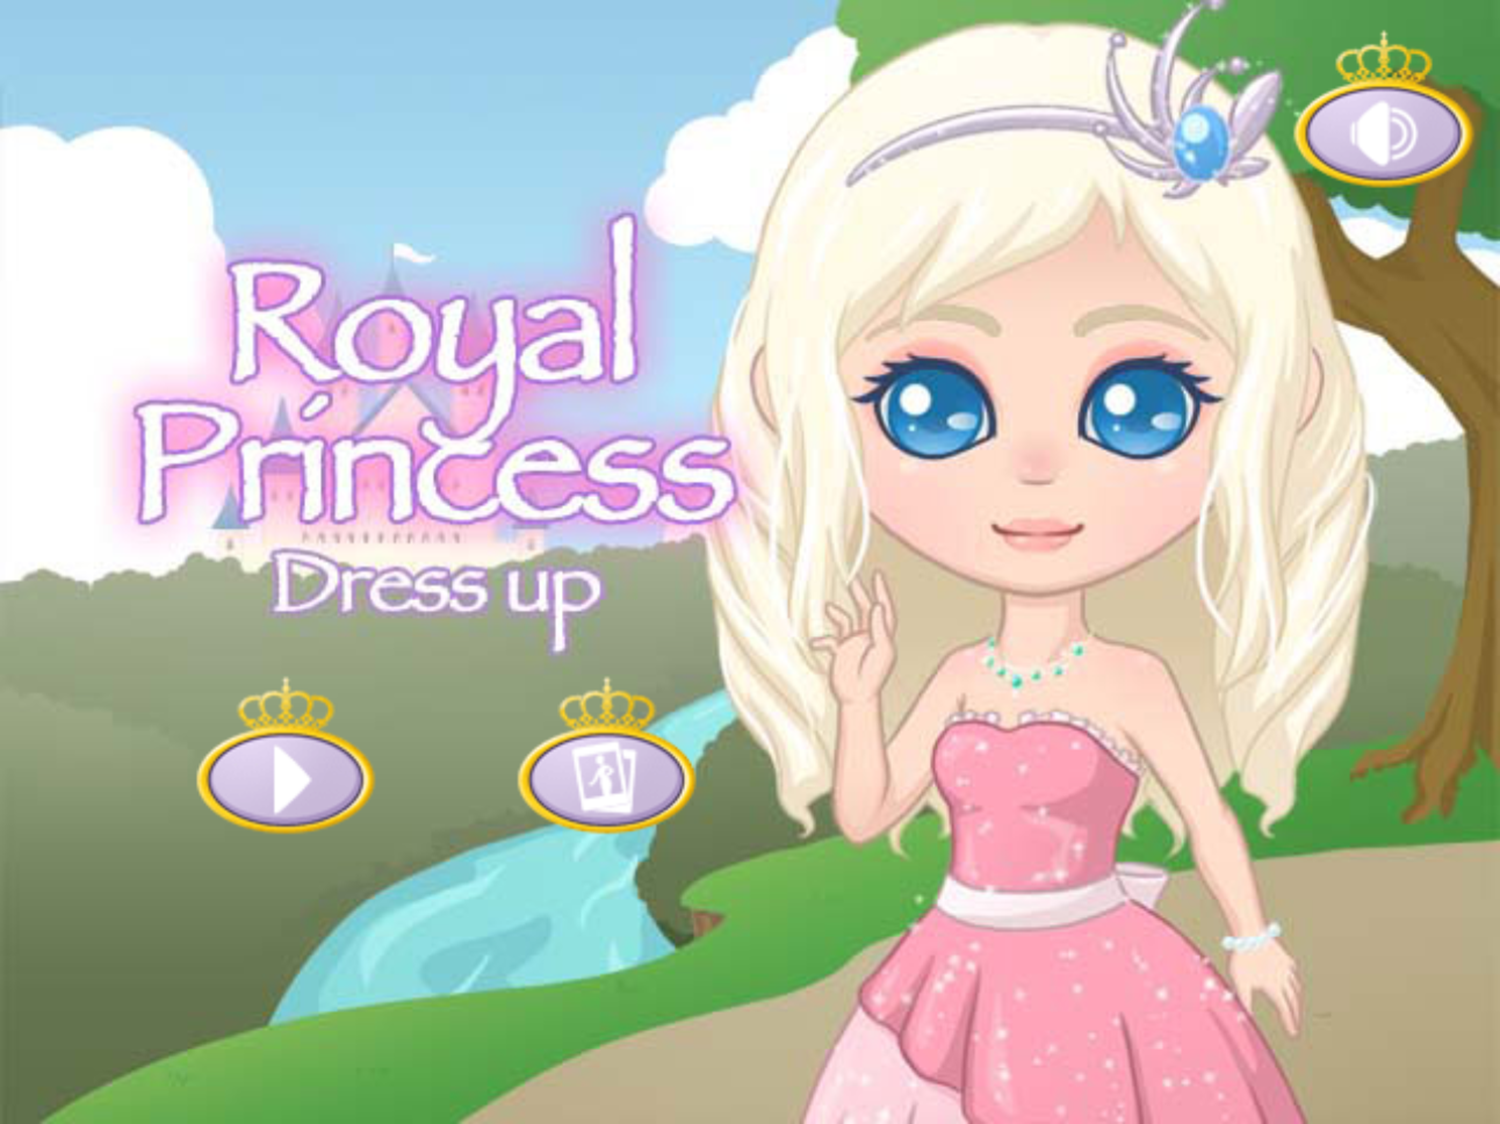 Royal Princess Dress Up Game Welcome Screen Screenshot.